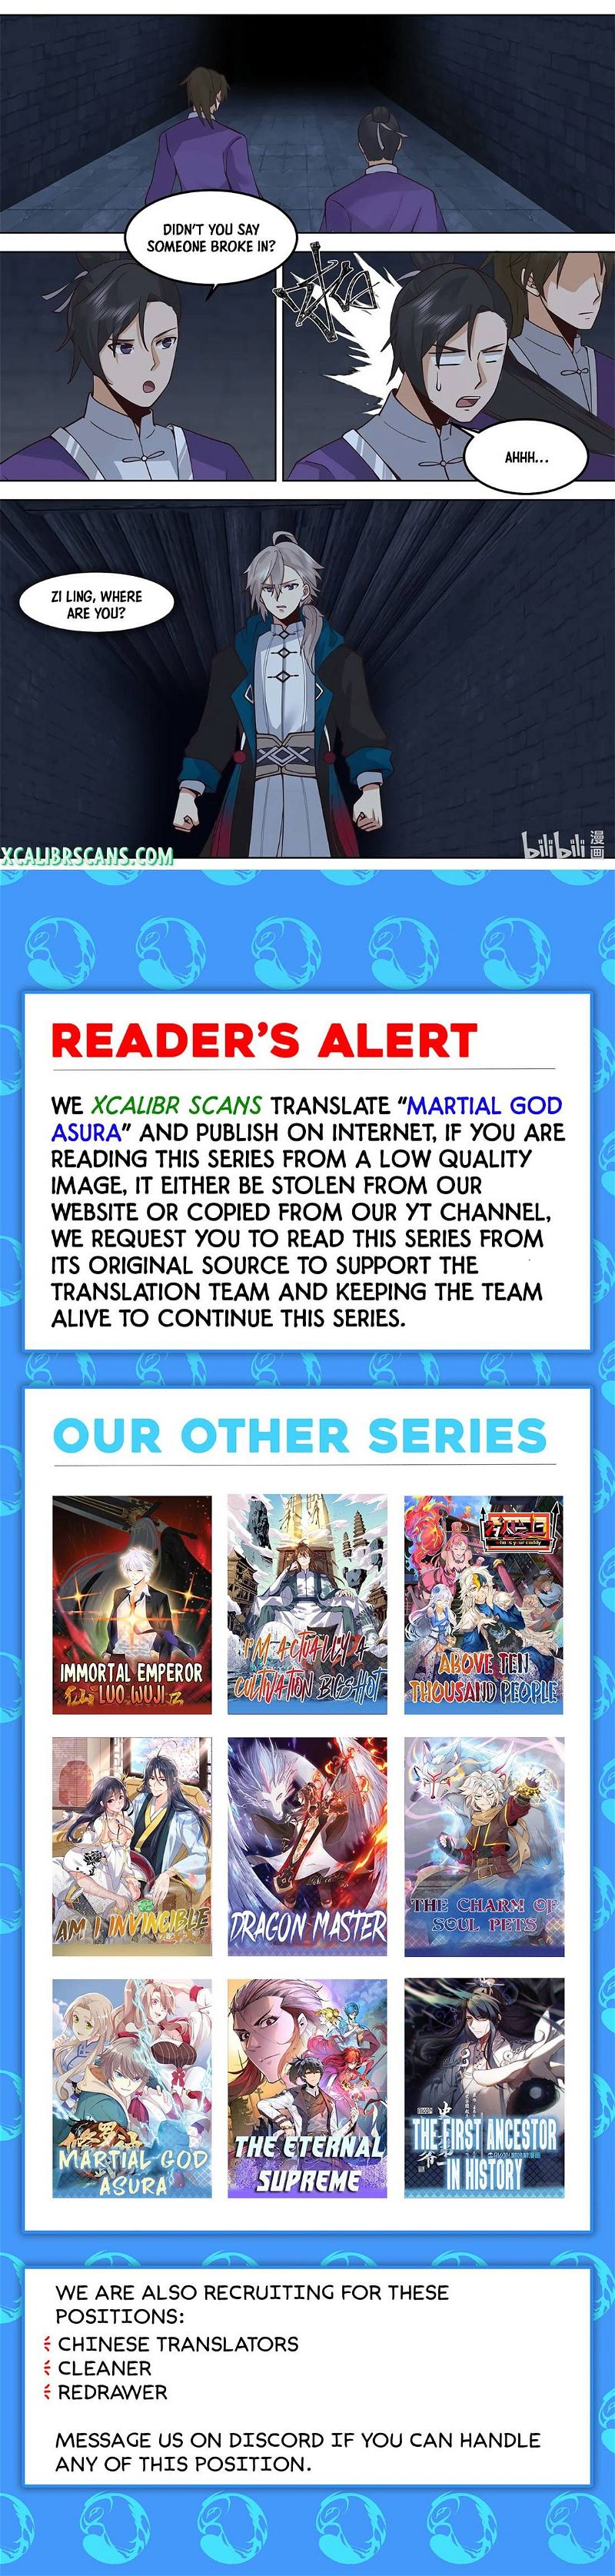 Martial God Asura Chapter 533 page 10